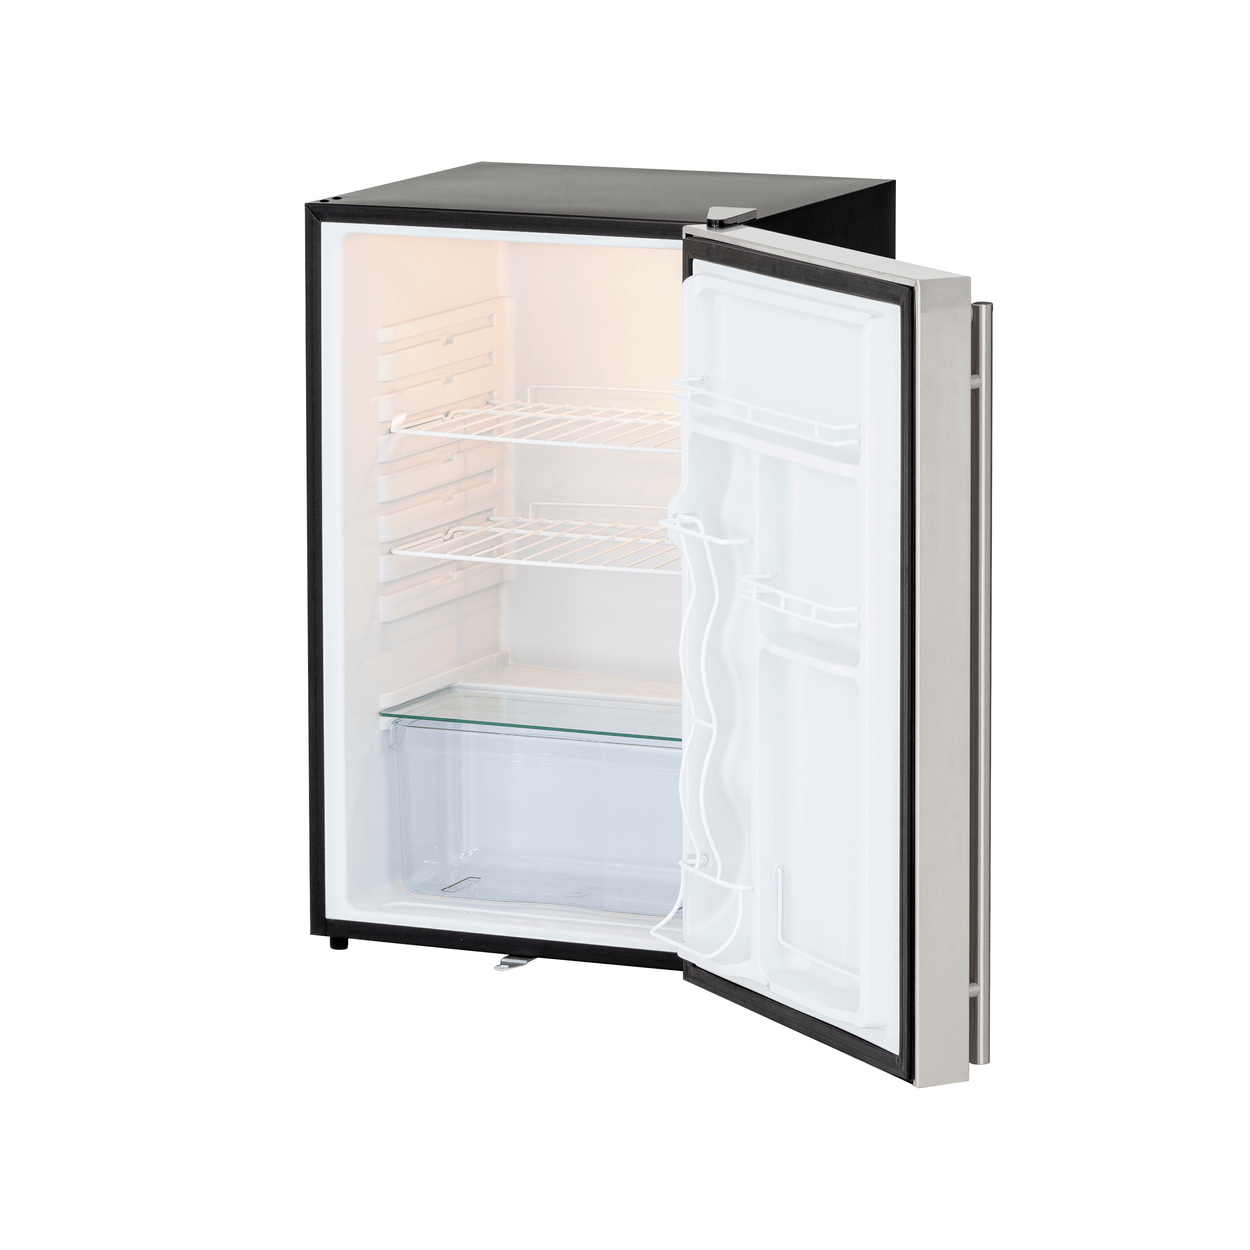 21" 4.5c Deluxe Compact Refrigerator